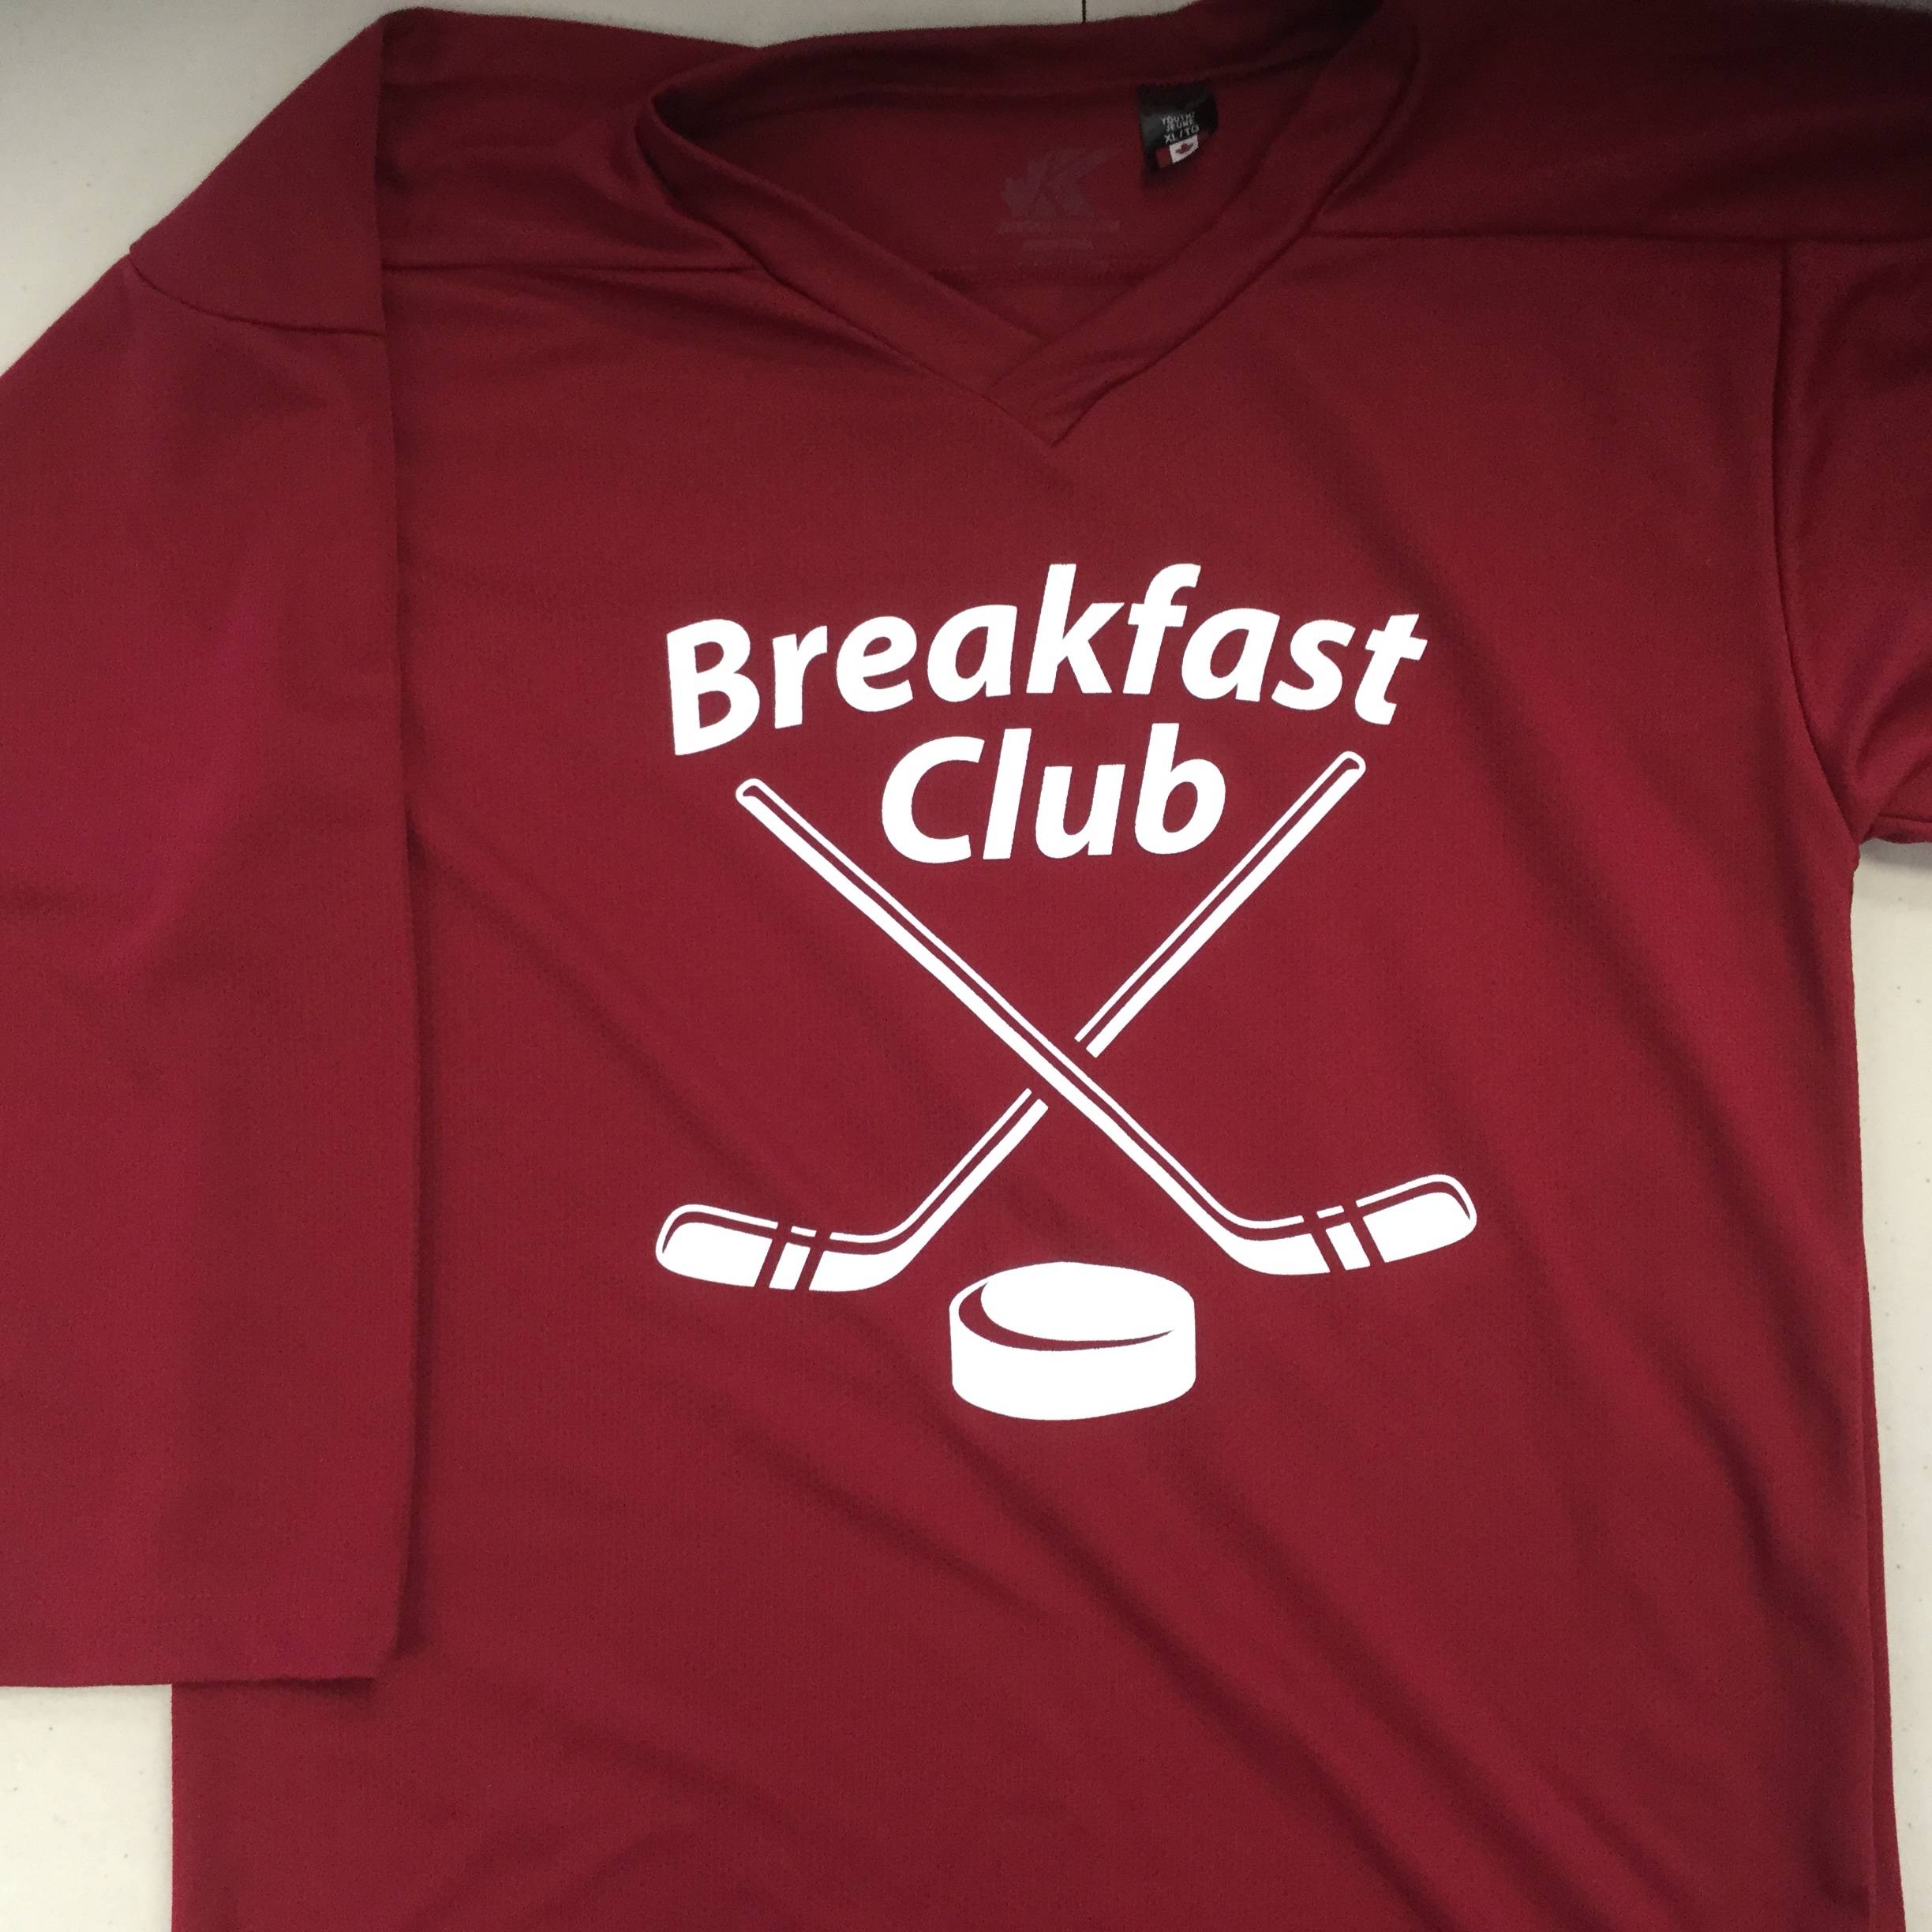 Custom Screen Printed Hockey Jerseys: Breakfast Club (Kobe 5400 Maroon)